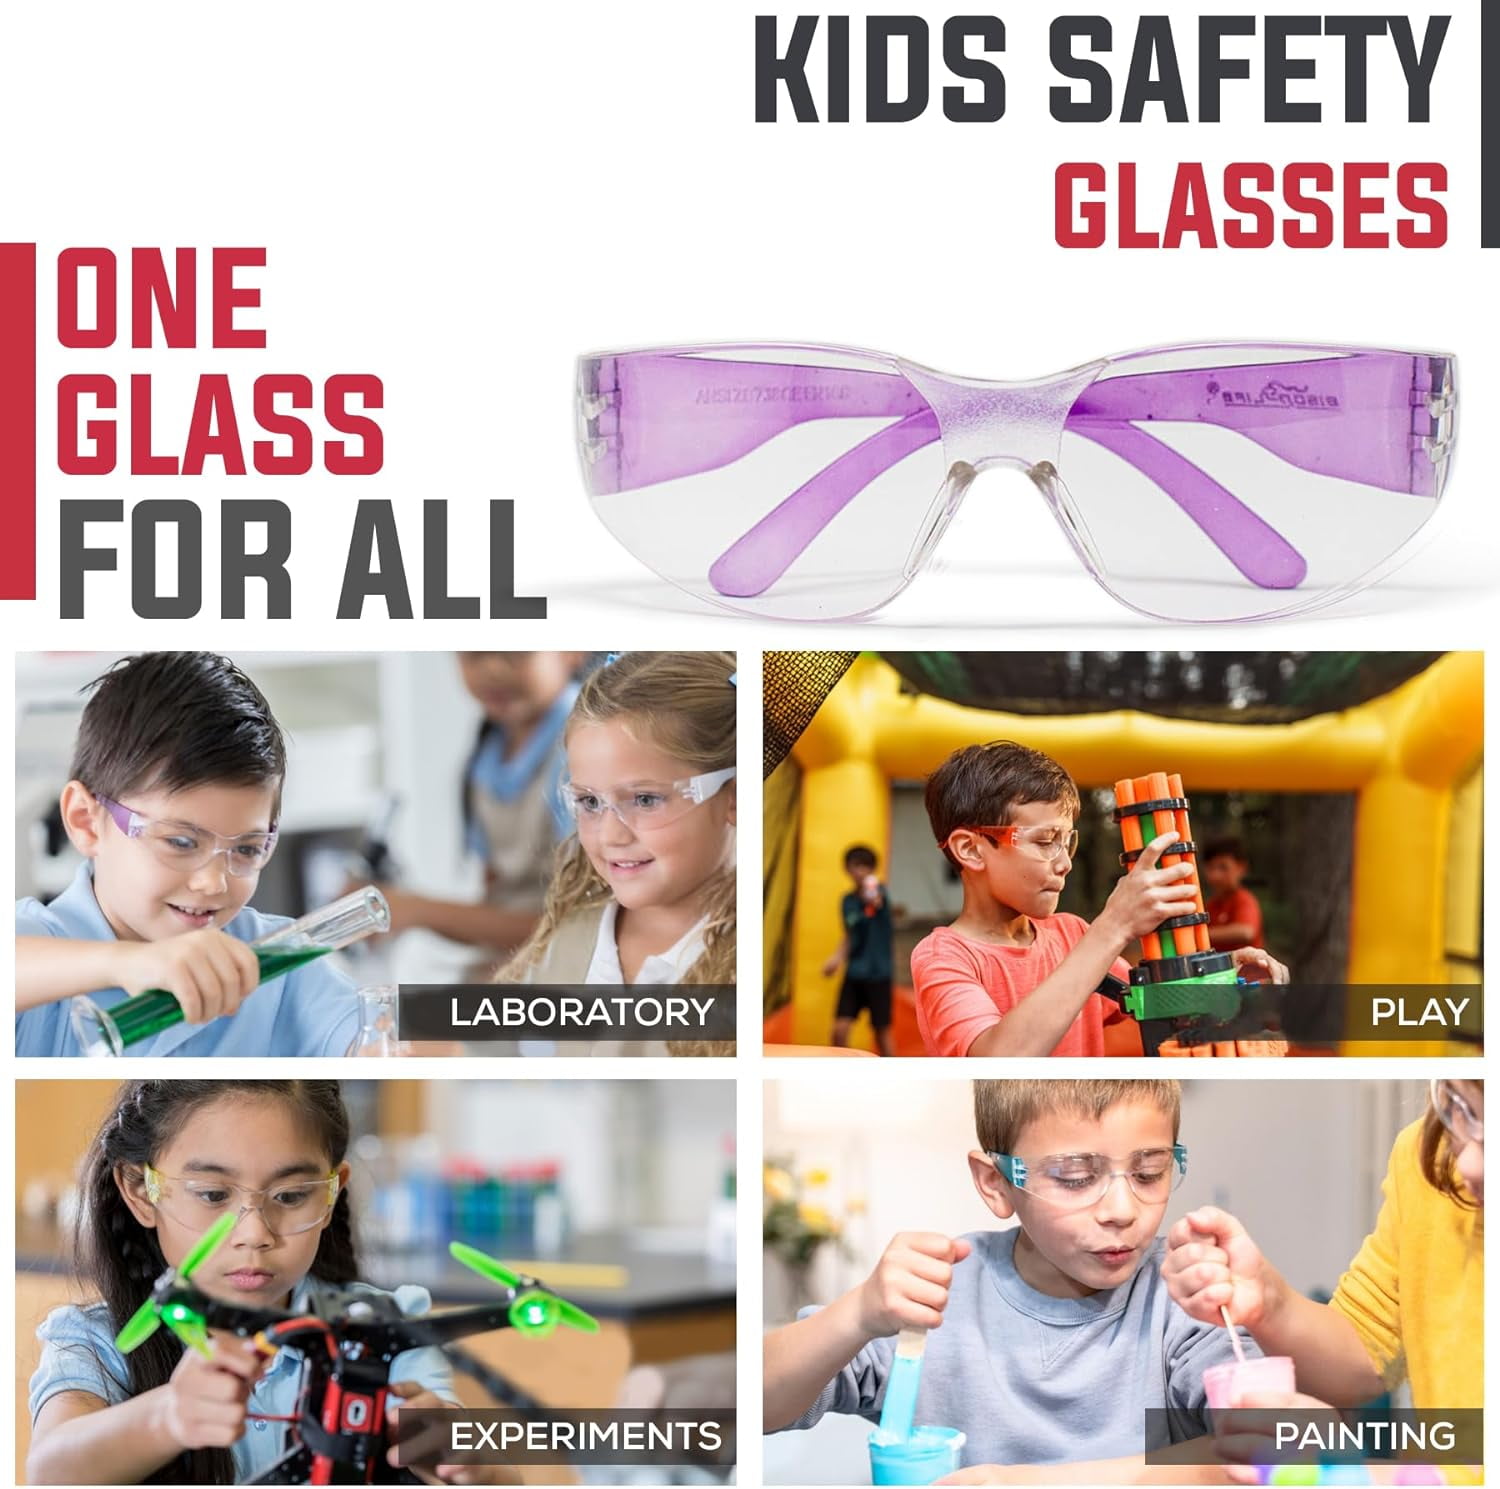 Save the Children/Santillana - Paper Glasses